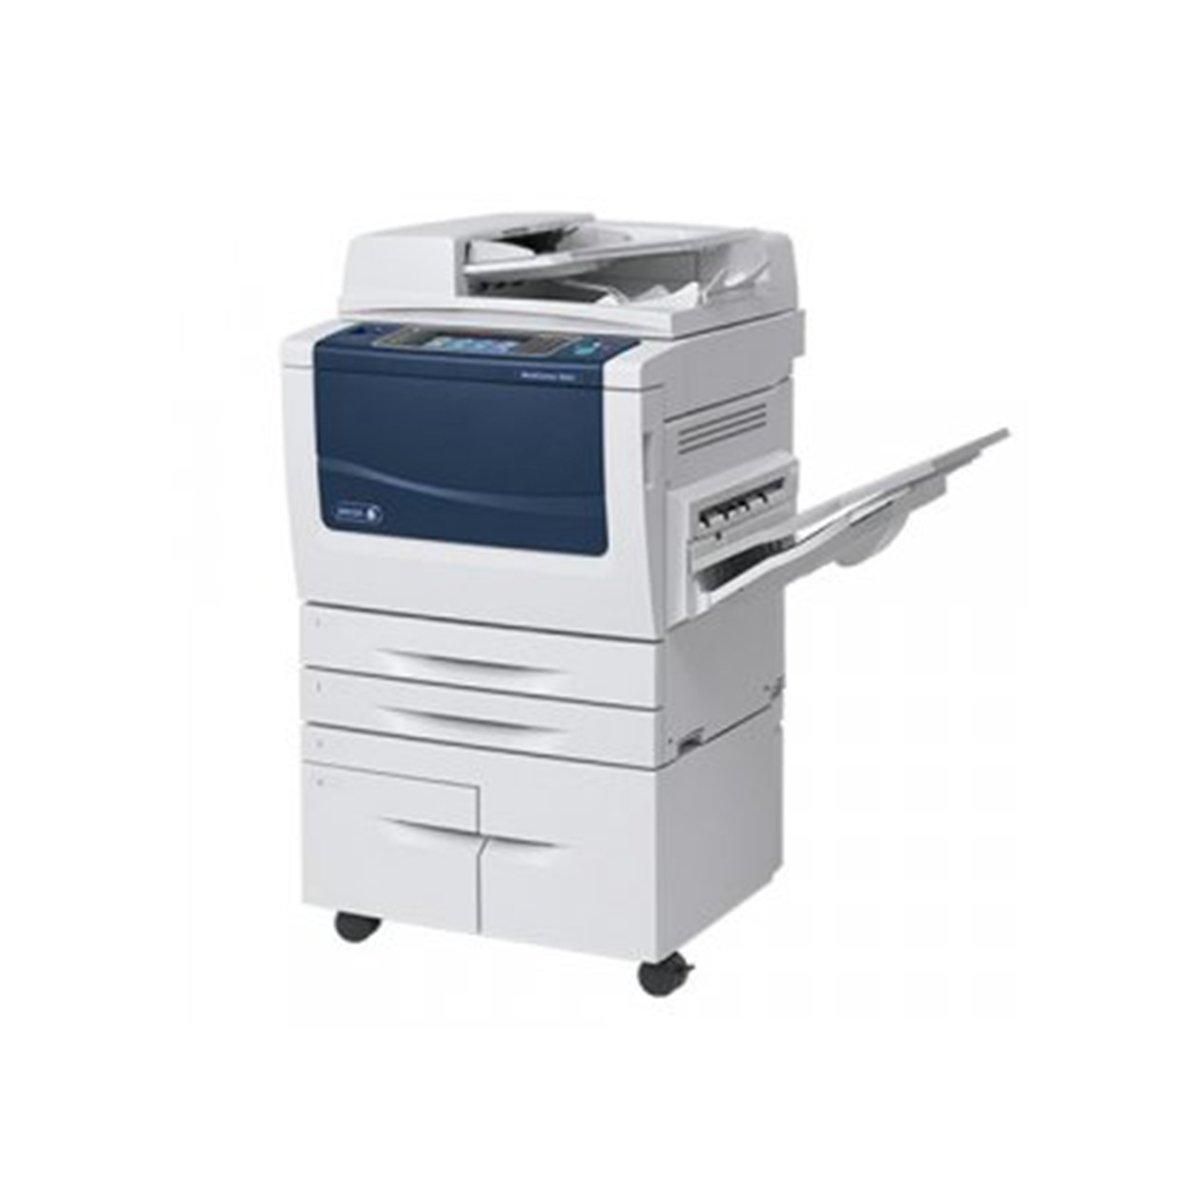 Xerox 5865 Multi Function Printer(MFP) - 𝐏𝐑𝐄𝐌𝐈𝐄𝐑 𝐓𝐑𝐀𝐃𝐄𝐑𝐒